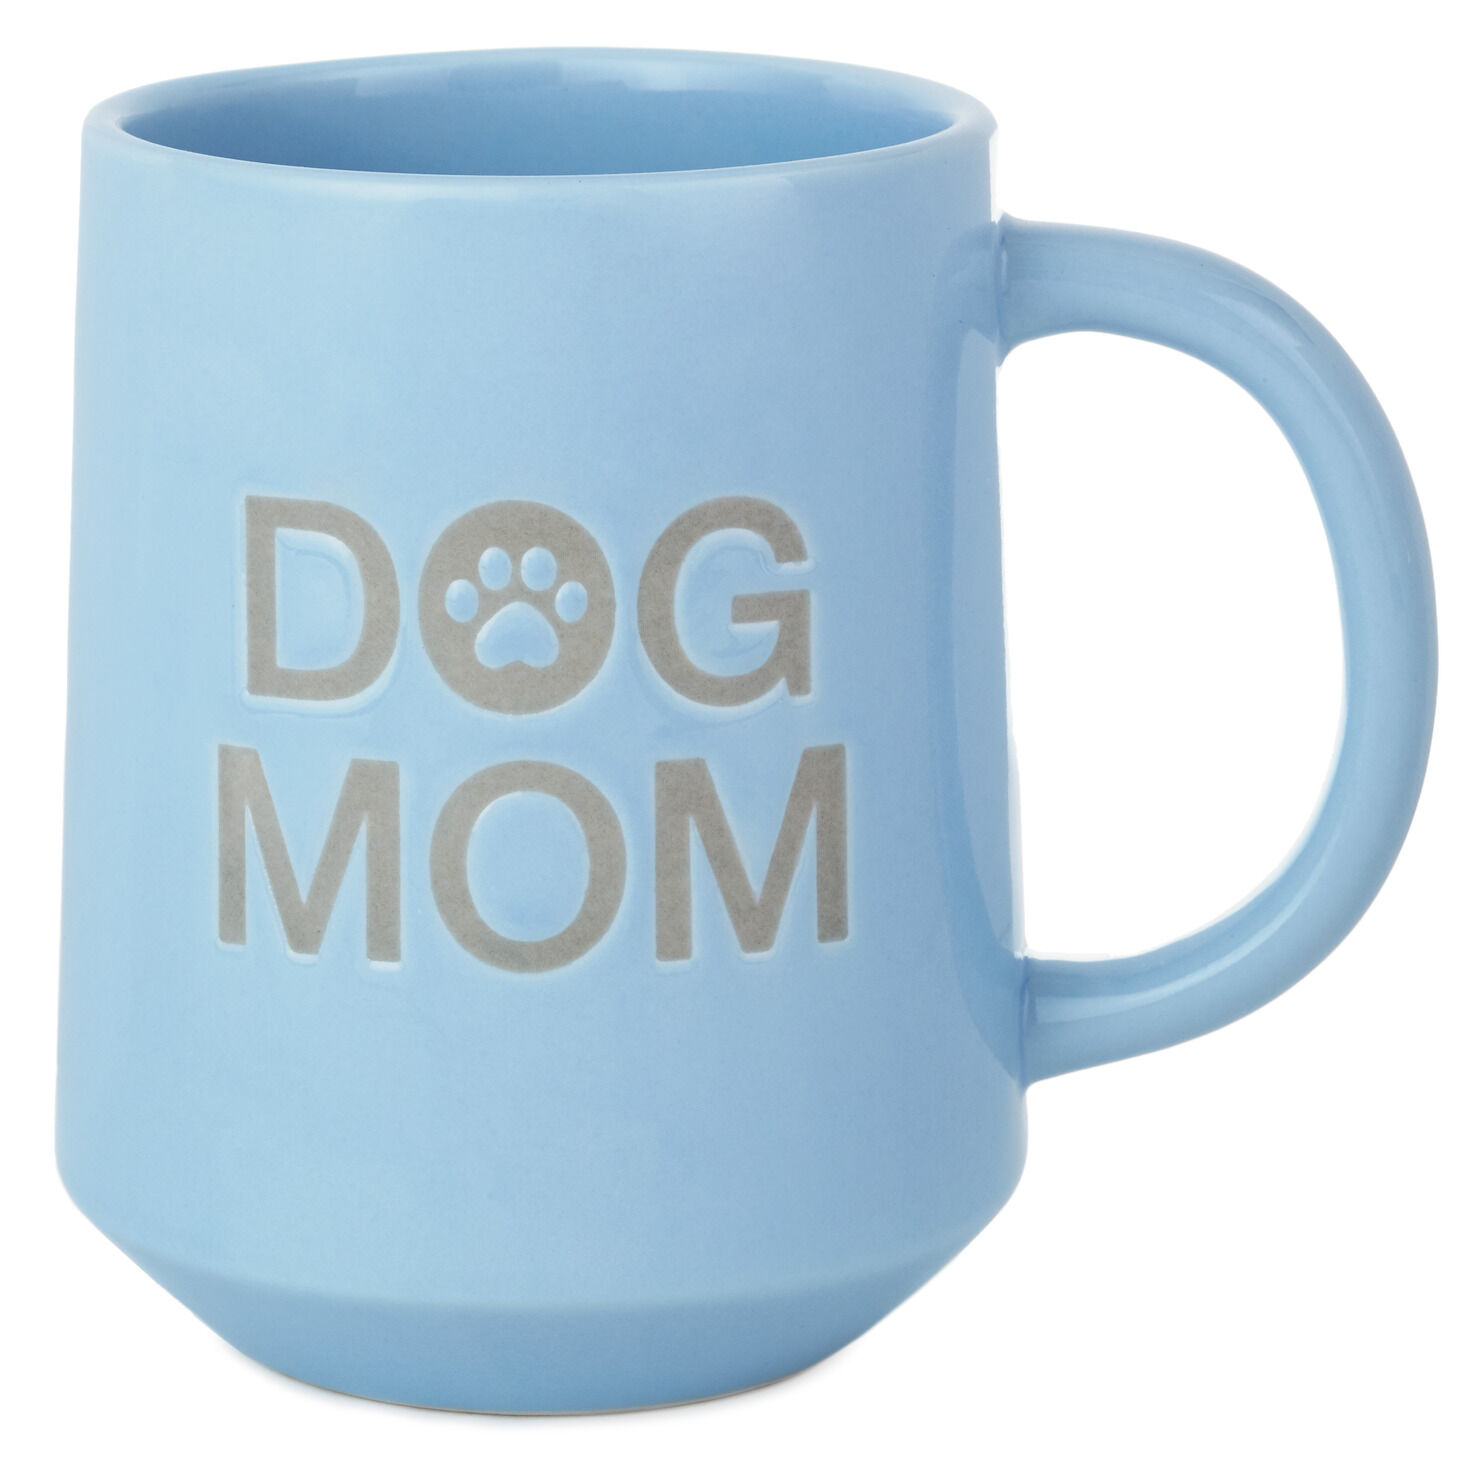 Dog Mom Ceramic Mug, 17 oz. - Mugs & Teacups - Hallmark